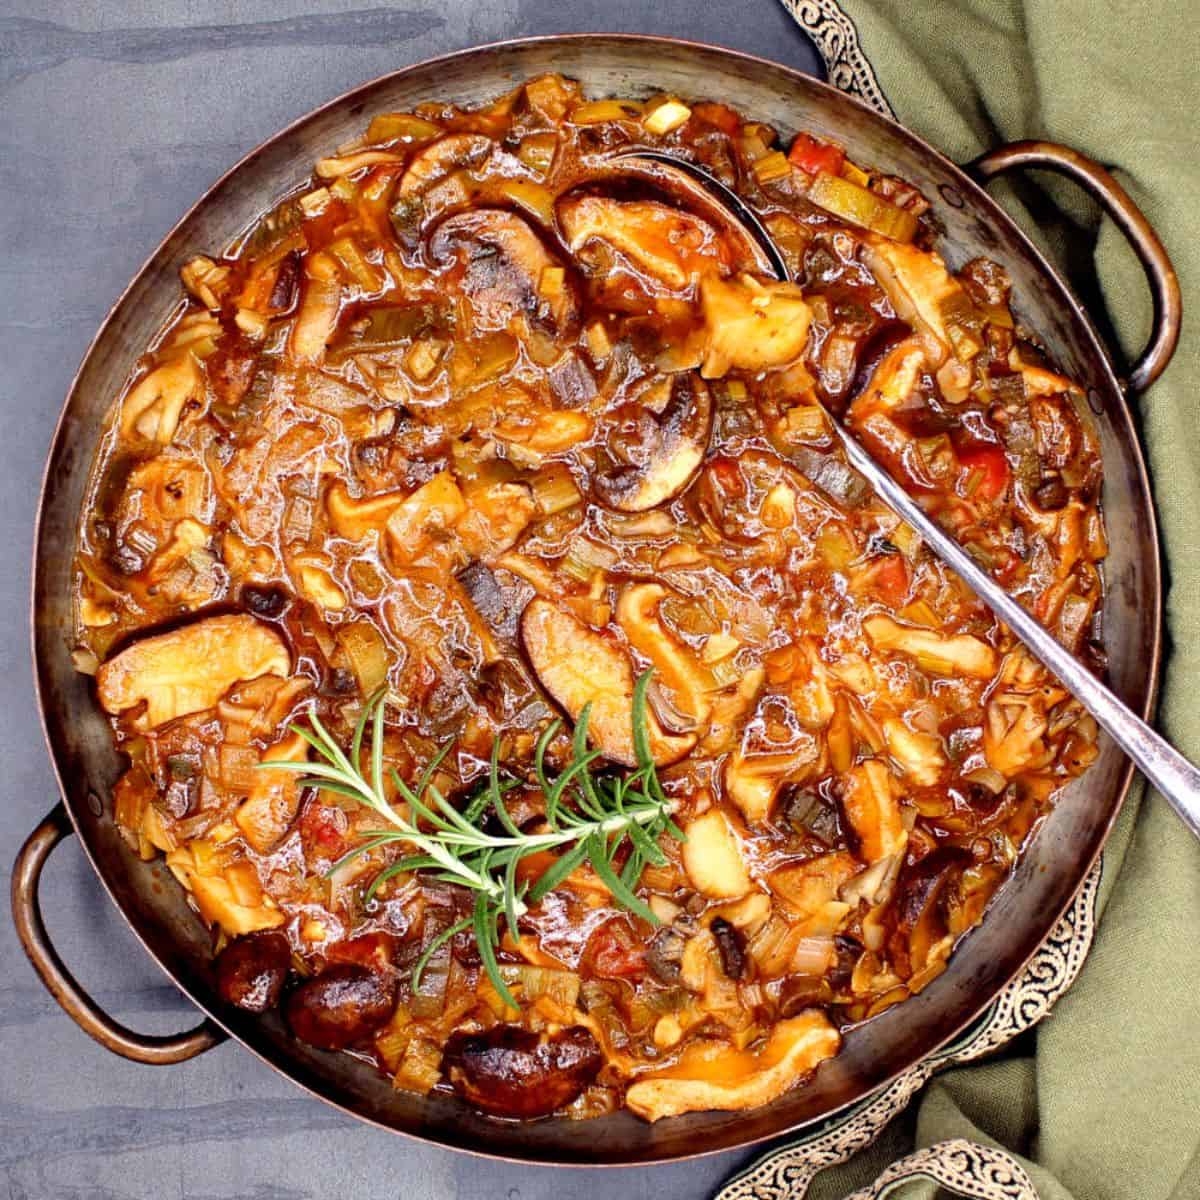 https://holycowvegan.net/wp-content/uploads/2017/10/mushroom-stew-recipe-1.jpg